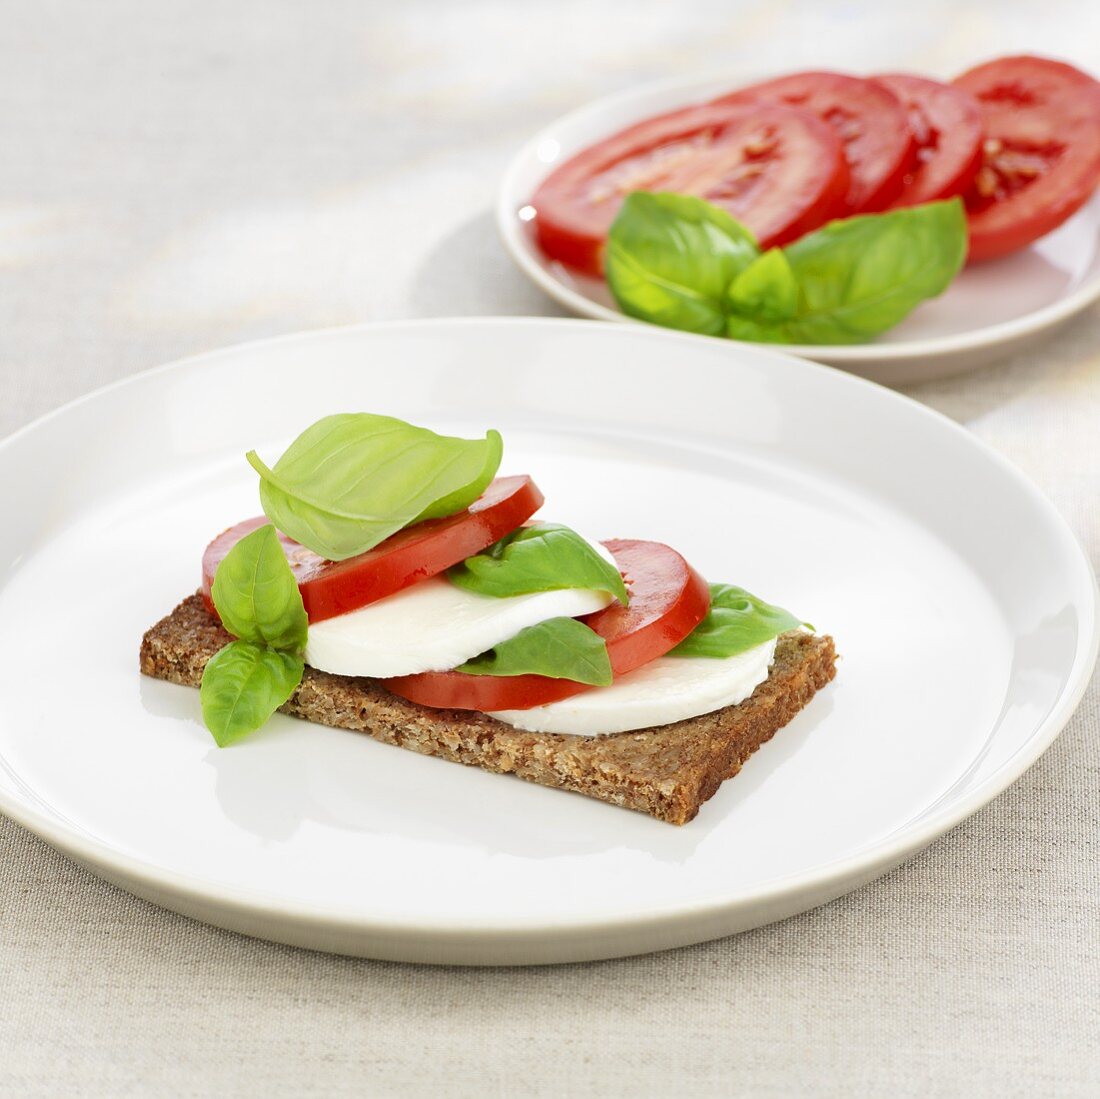 Tomato, mozzarella and basil on wholemeal bread